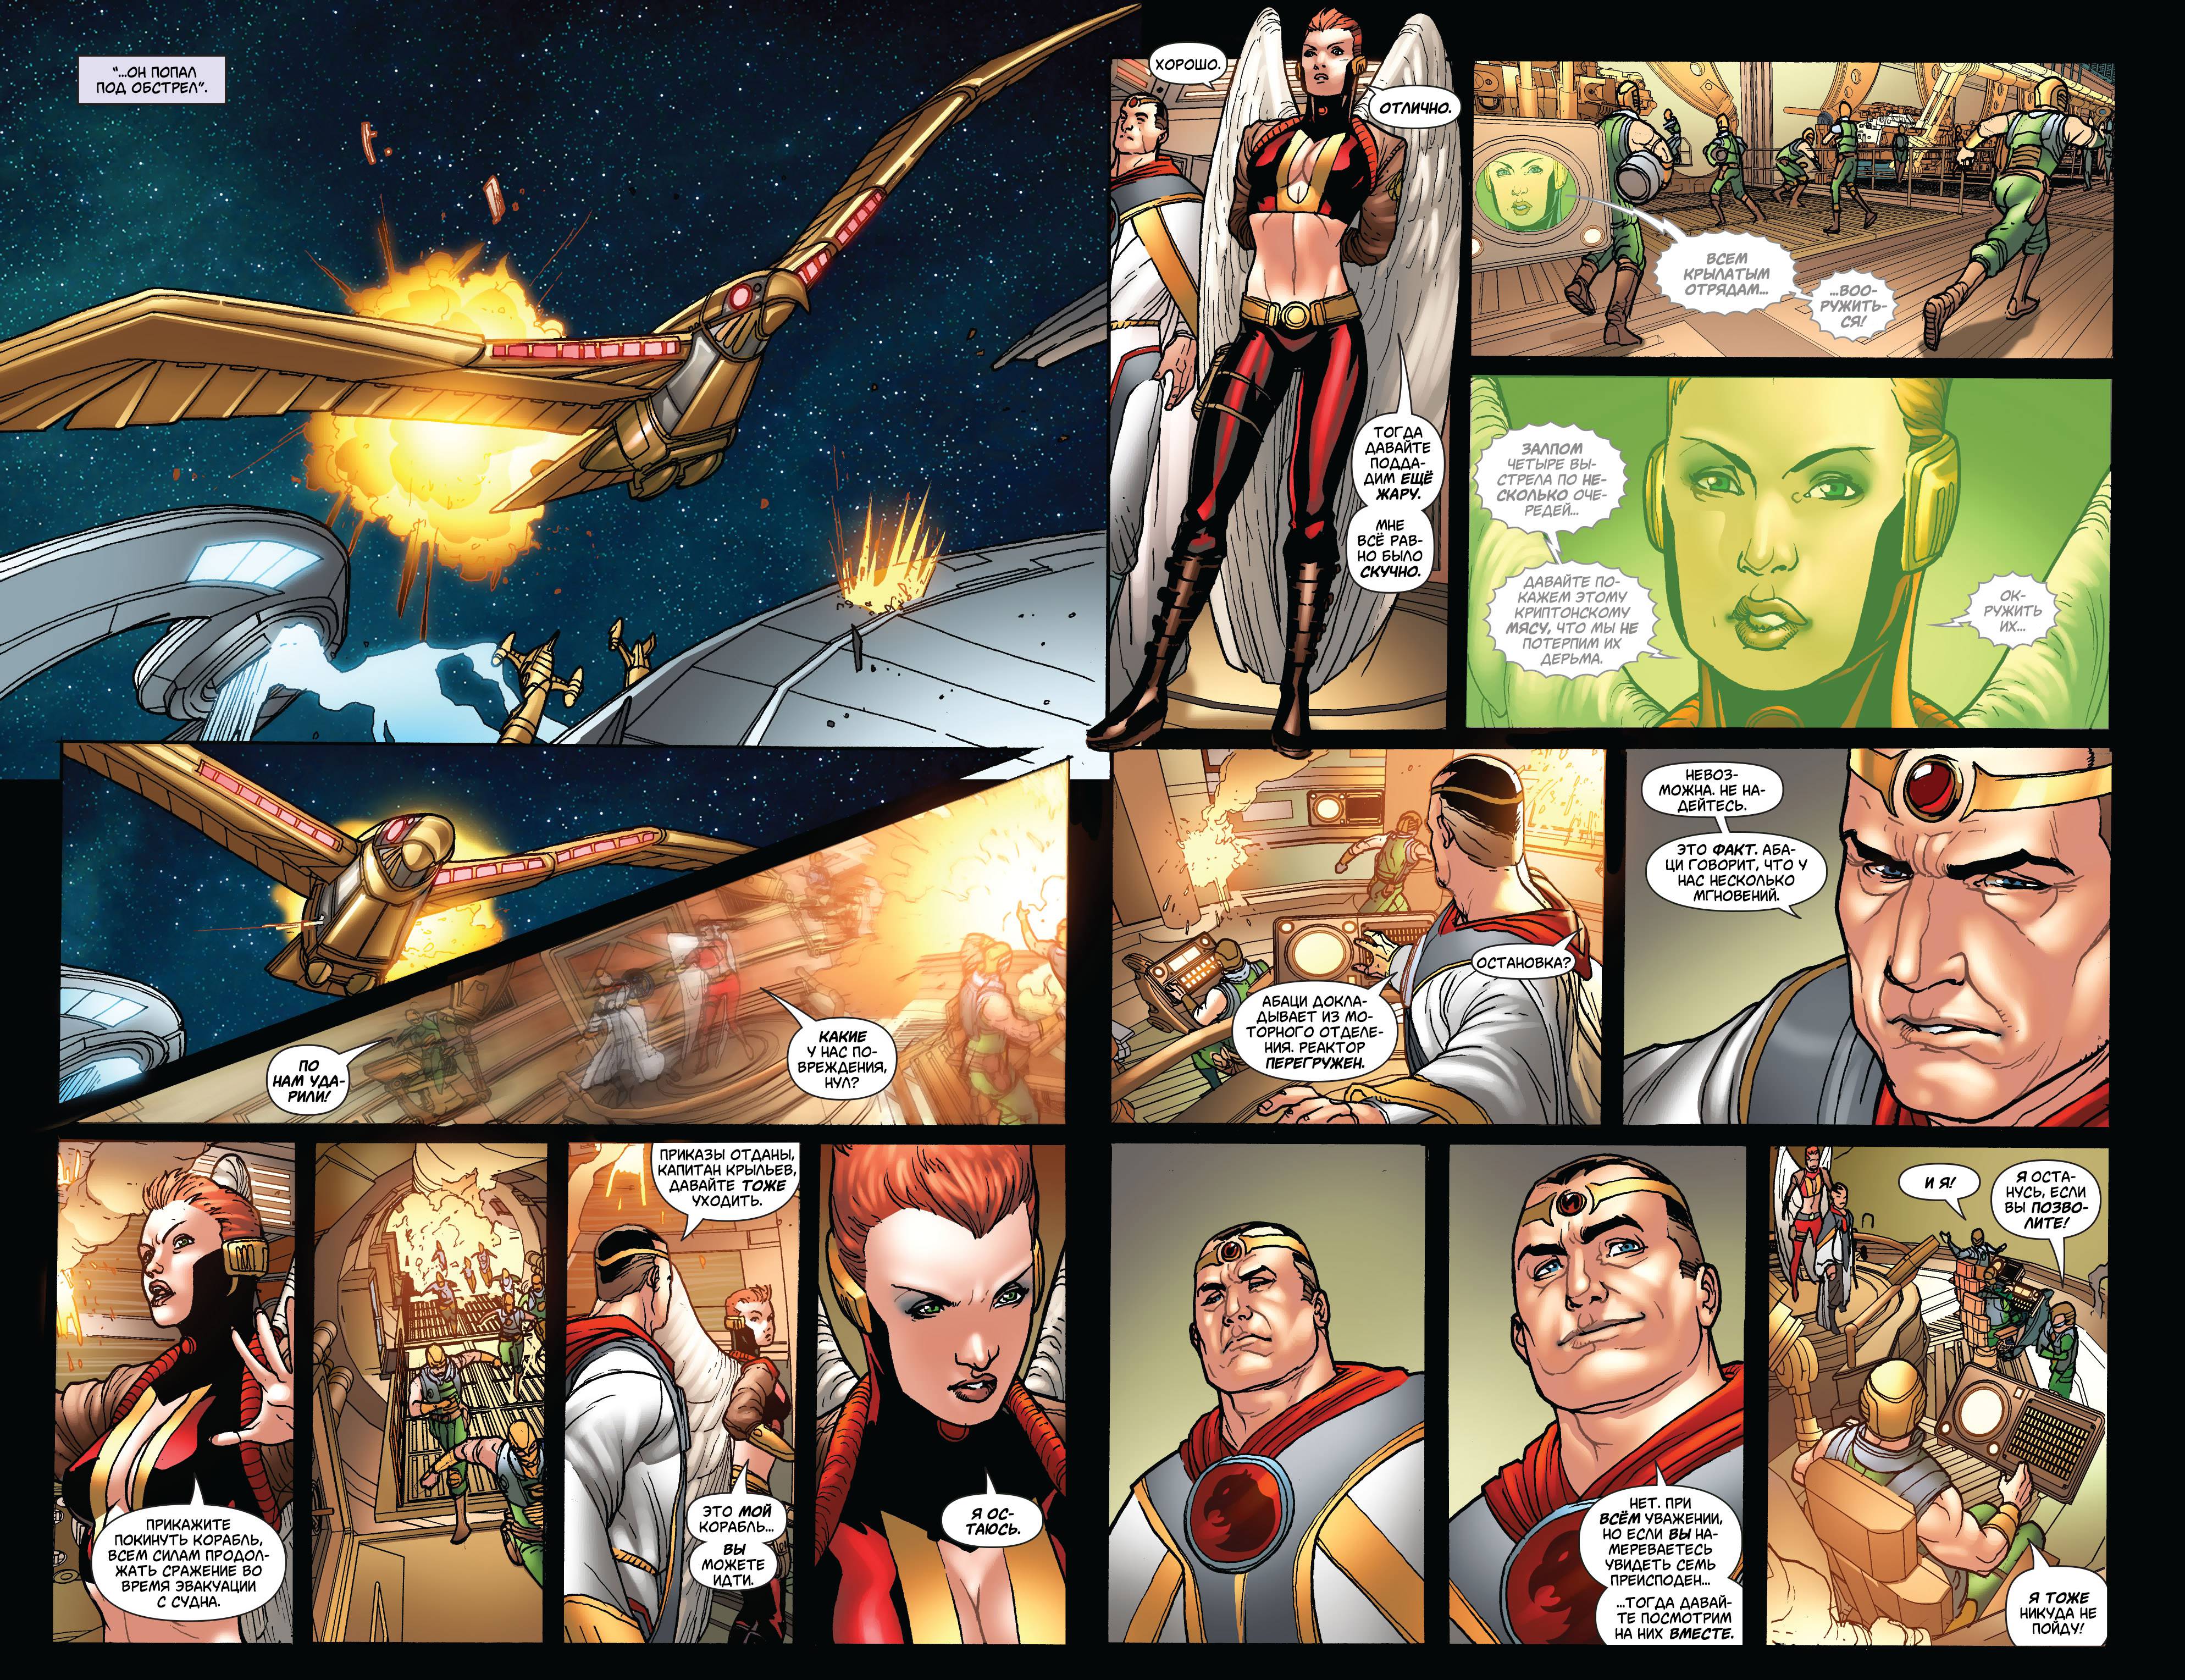 Супермен: Мир Нового Криптона №8 онлайн